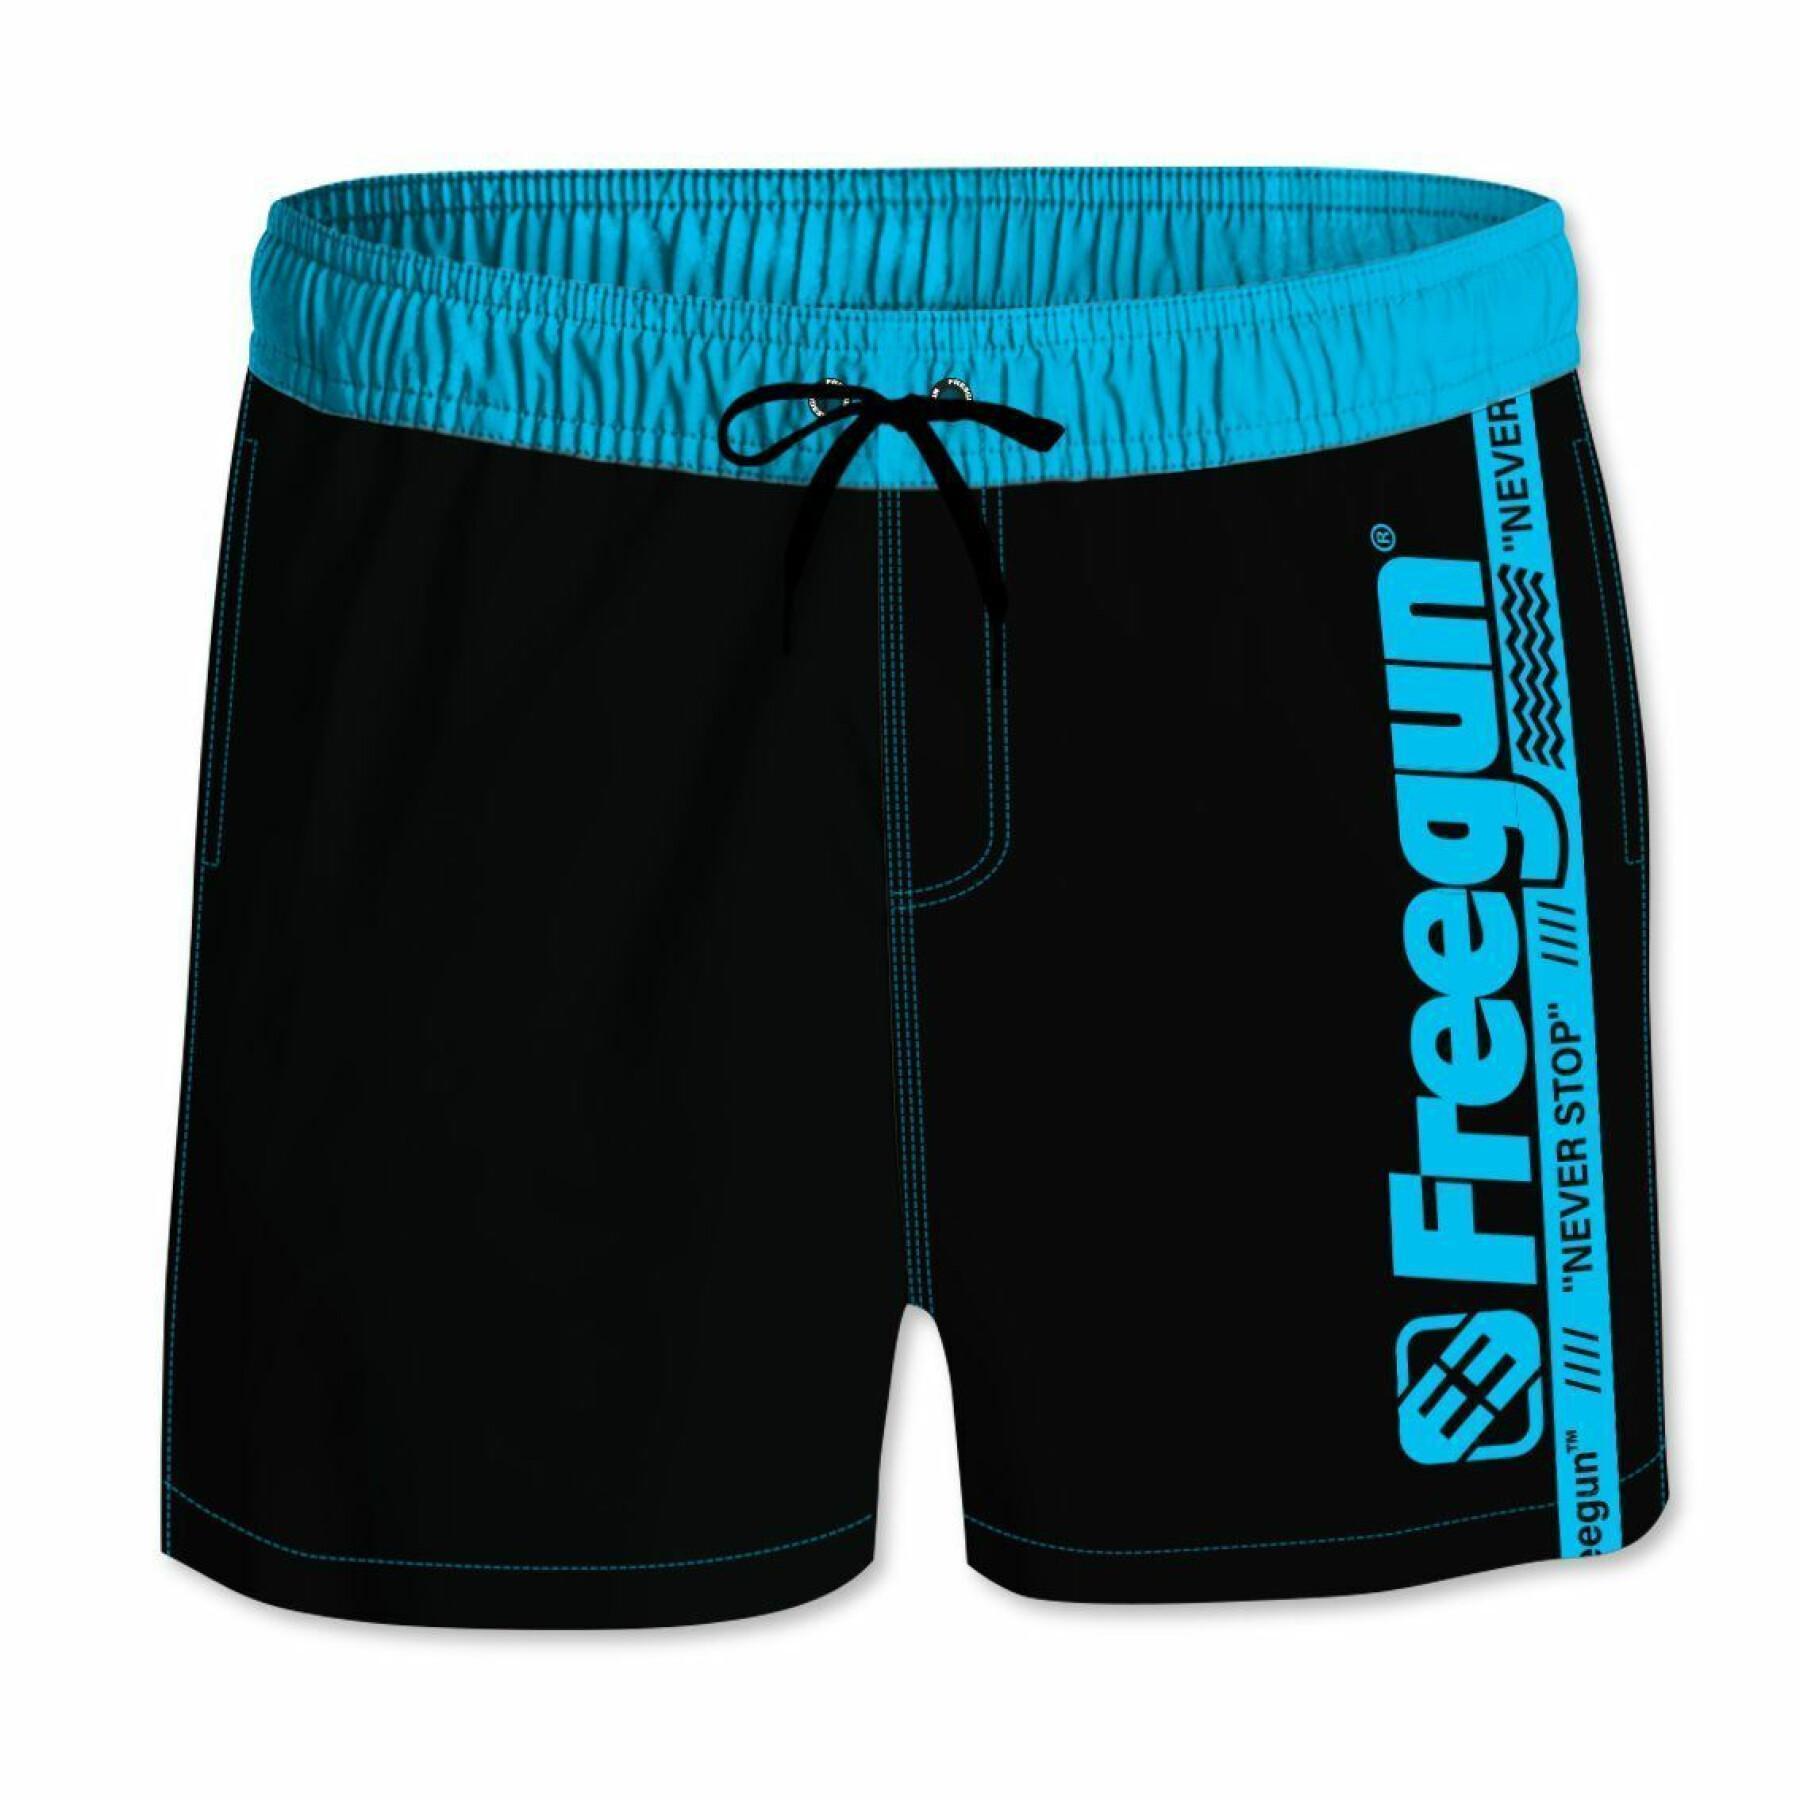 Short swim shorts with all-elastic waistband for children Freegun